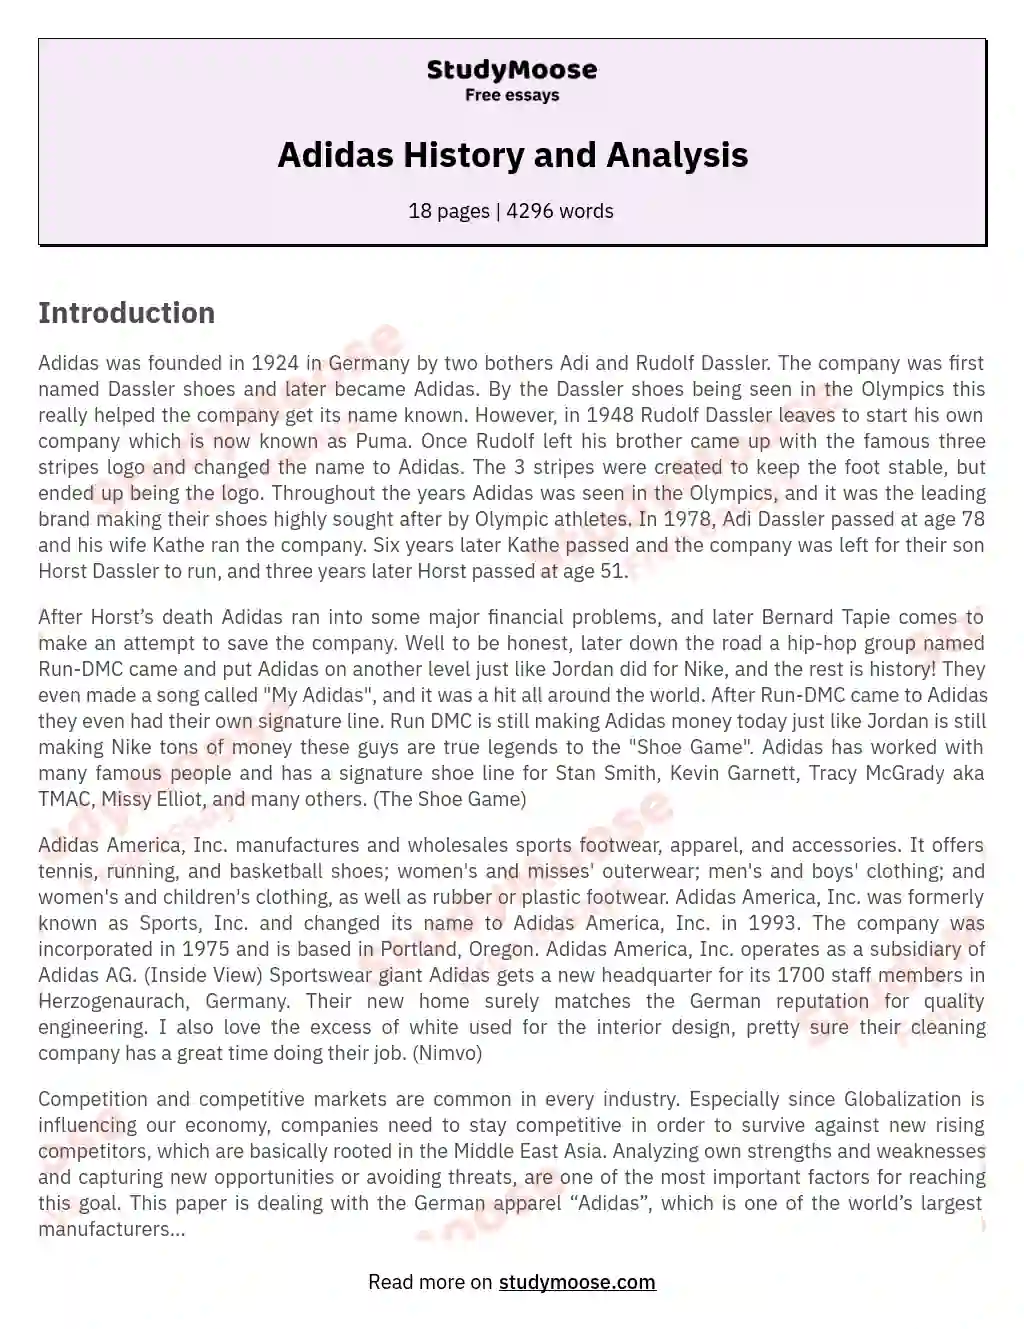 Adidas History and Analysis essay